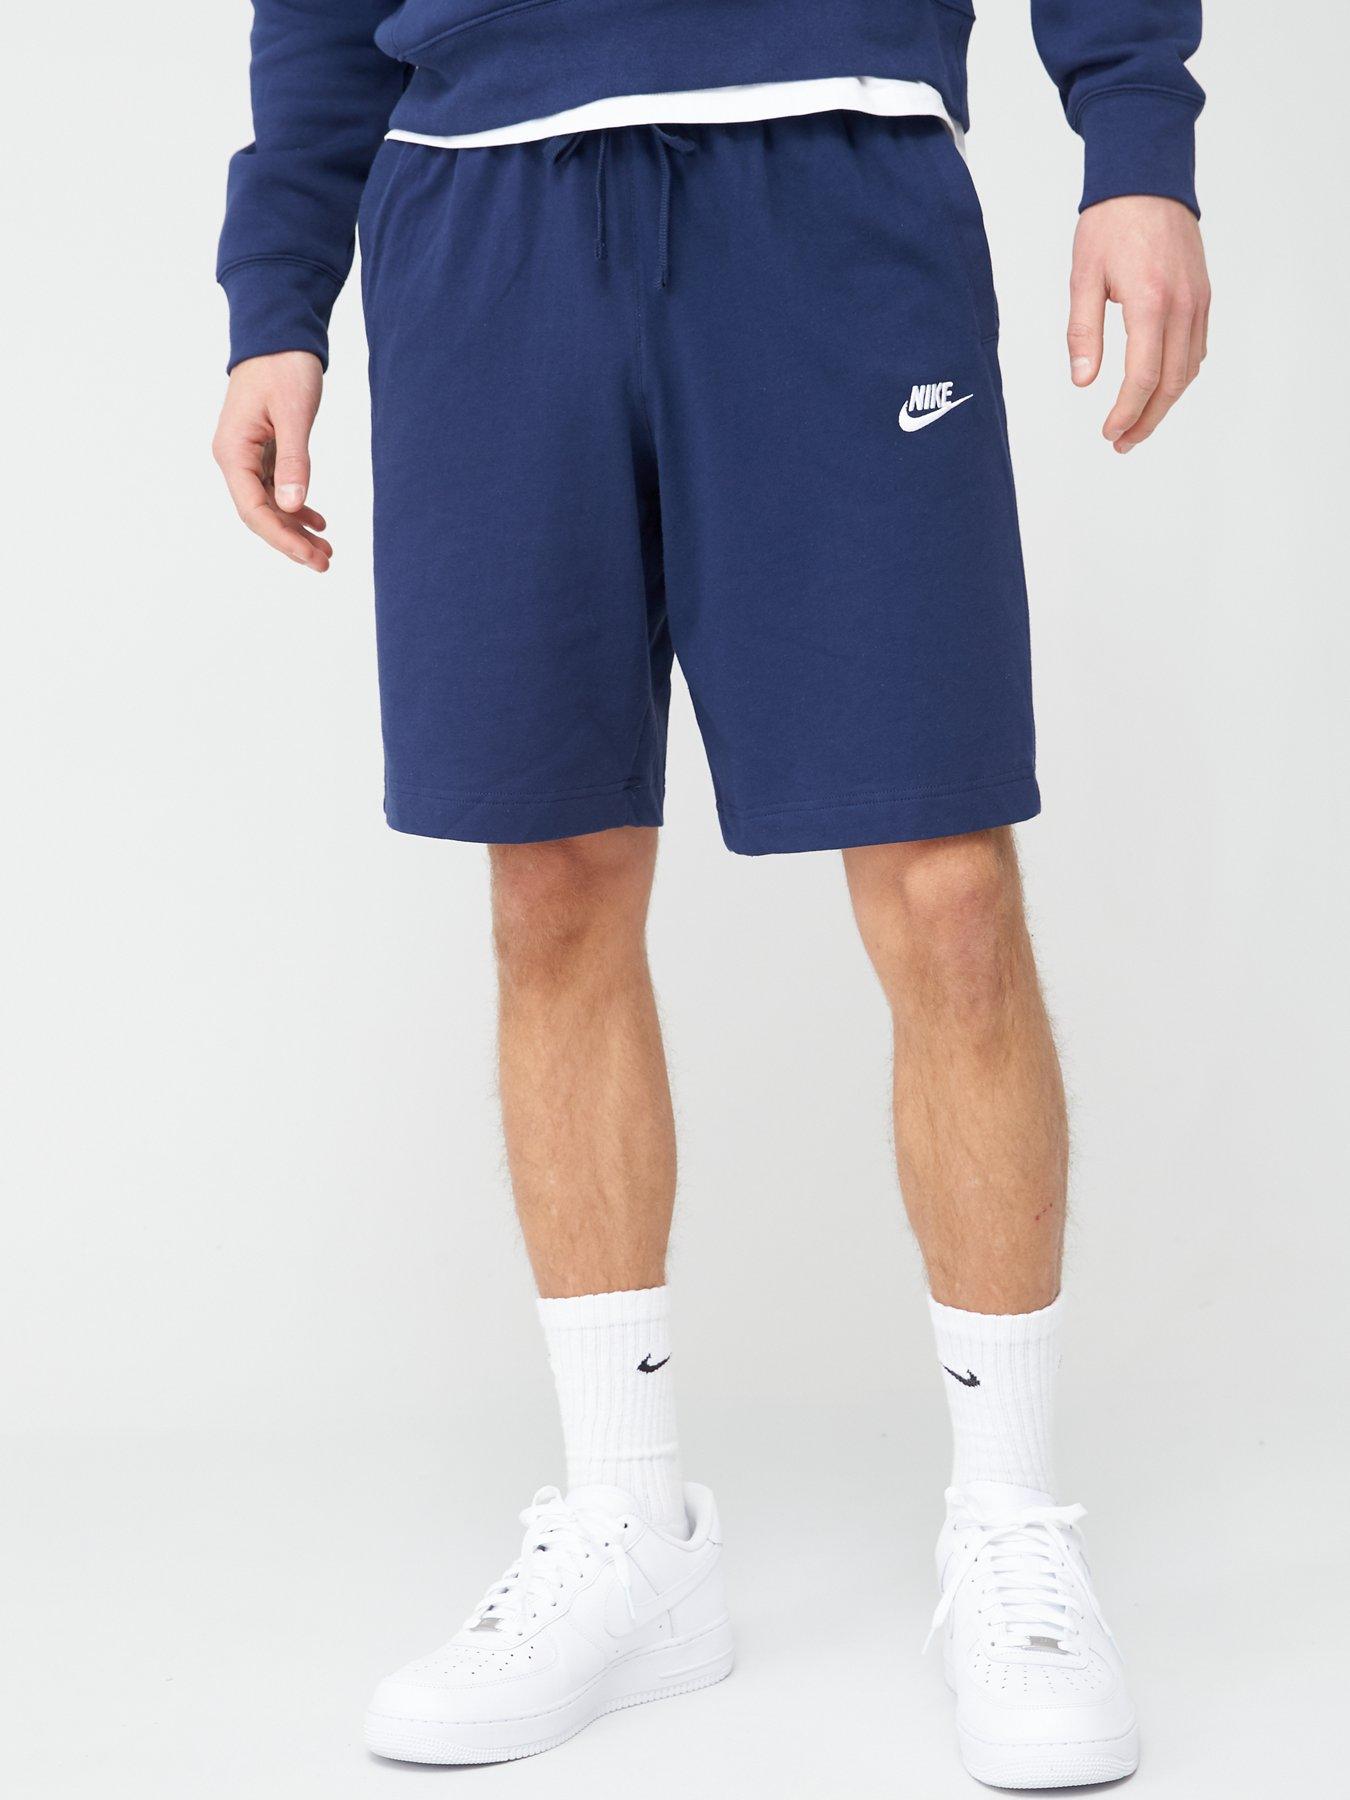 nike jersey shorts navy